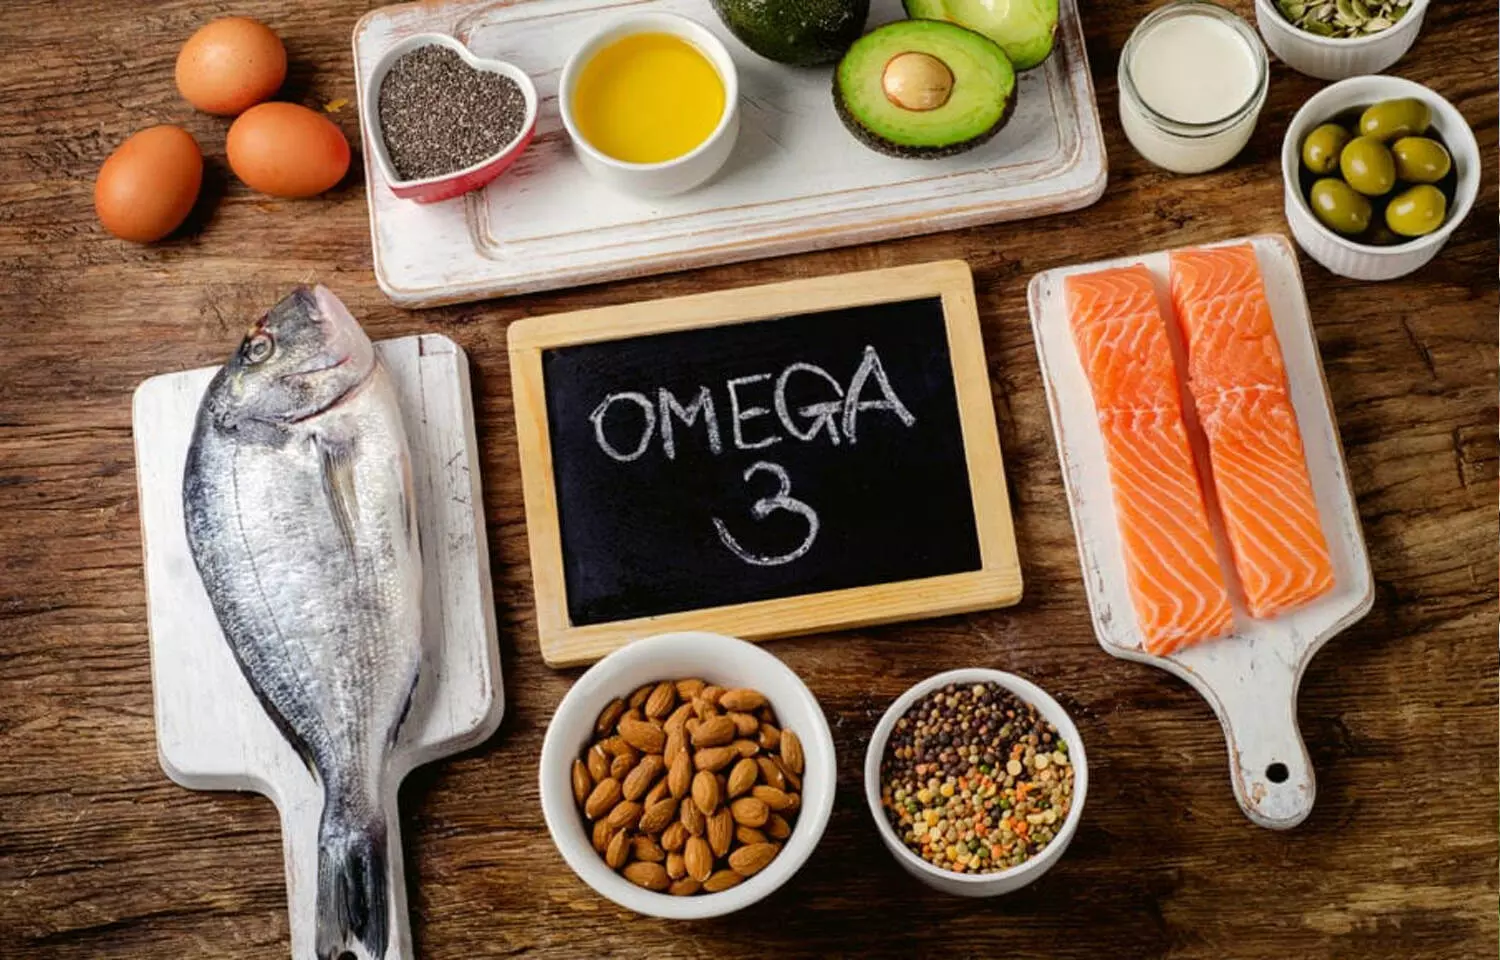 Can Omega-3 fatty acids help elevate depression?